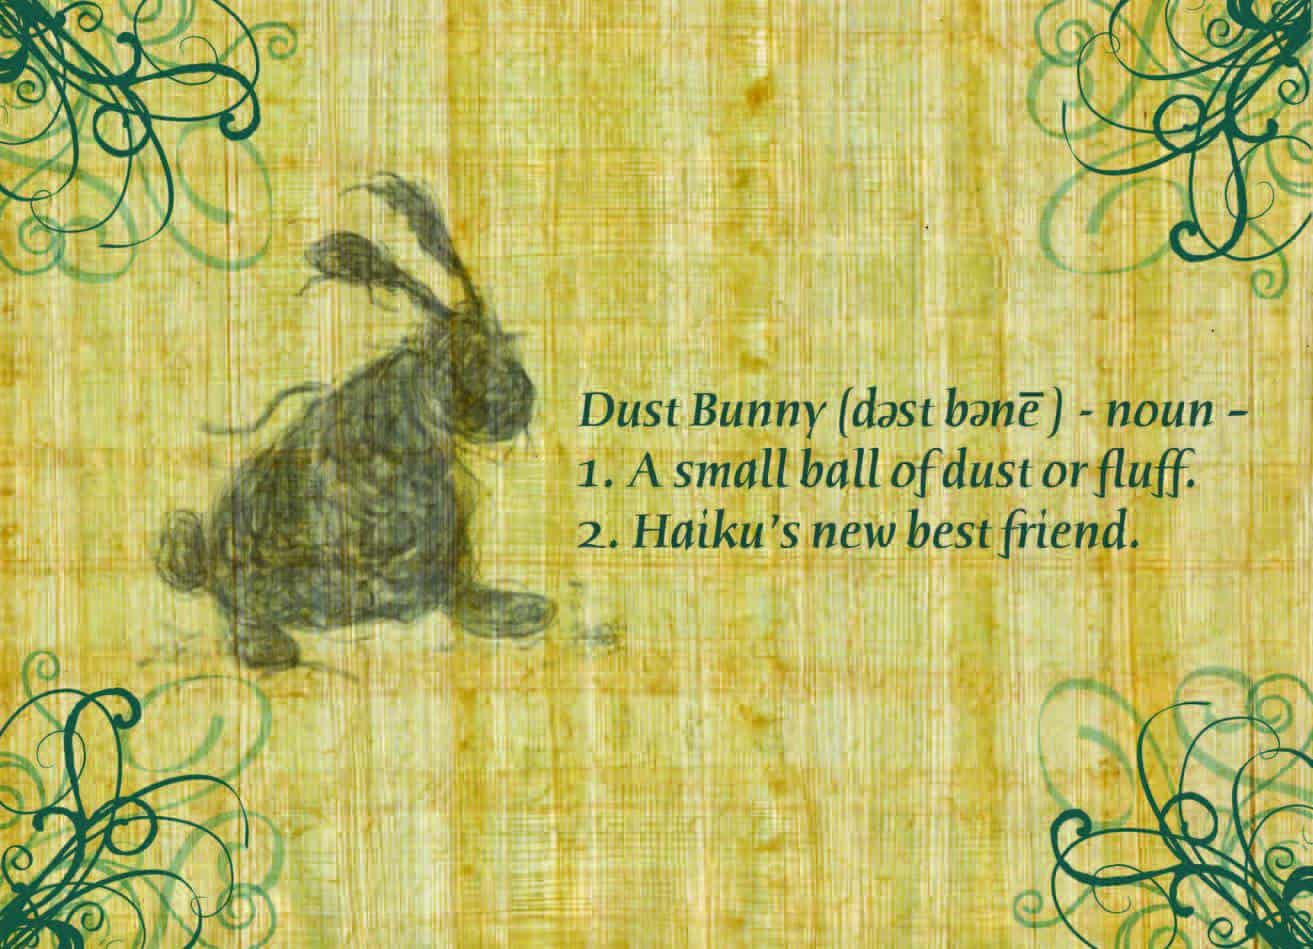 A Cat Named Haiku 2: The Dust Bunny 3